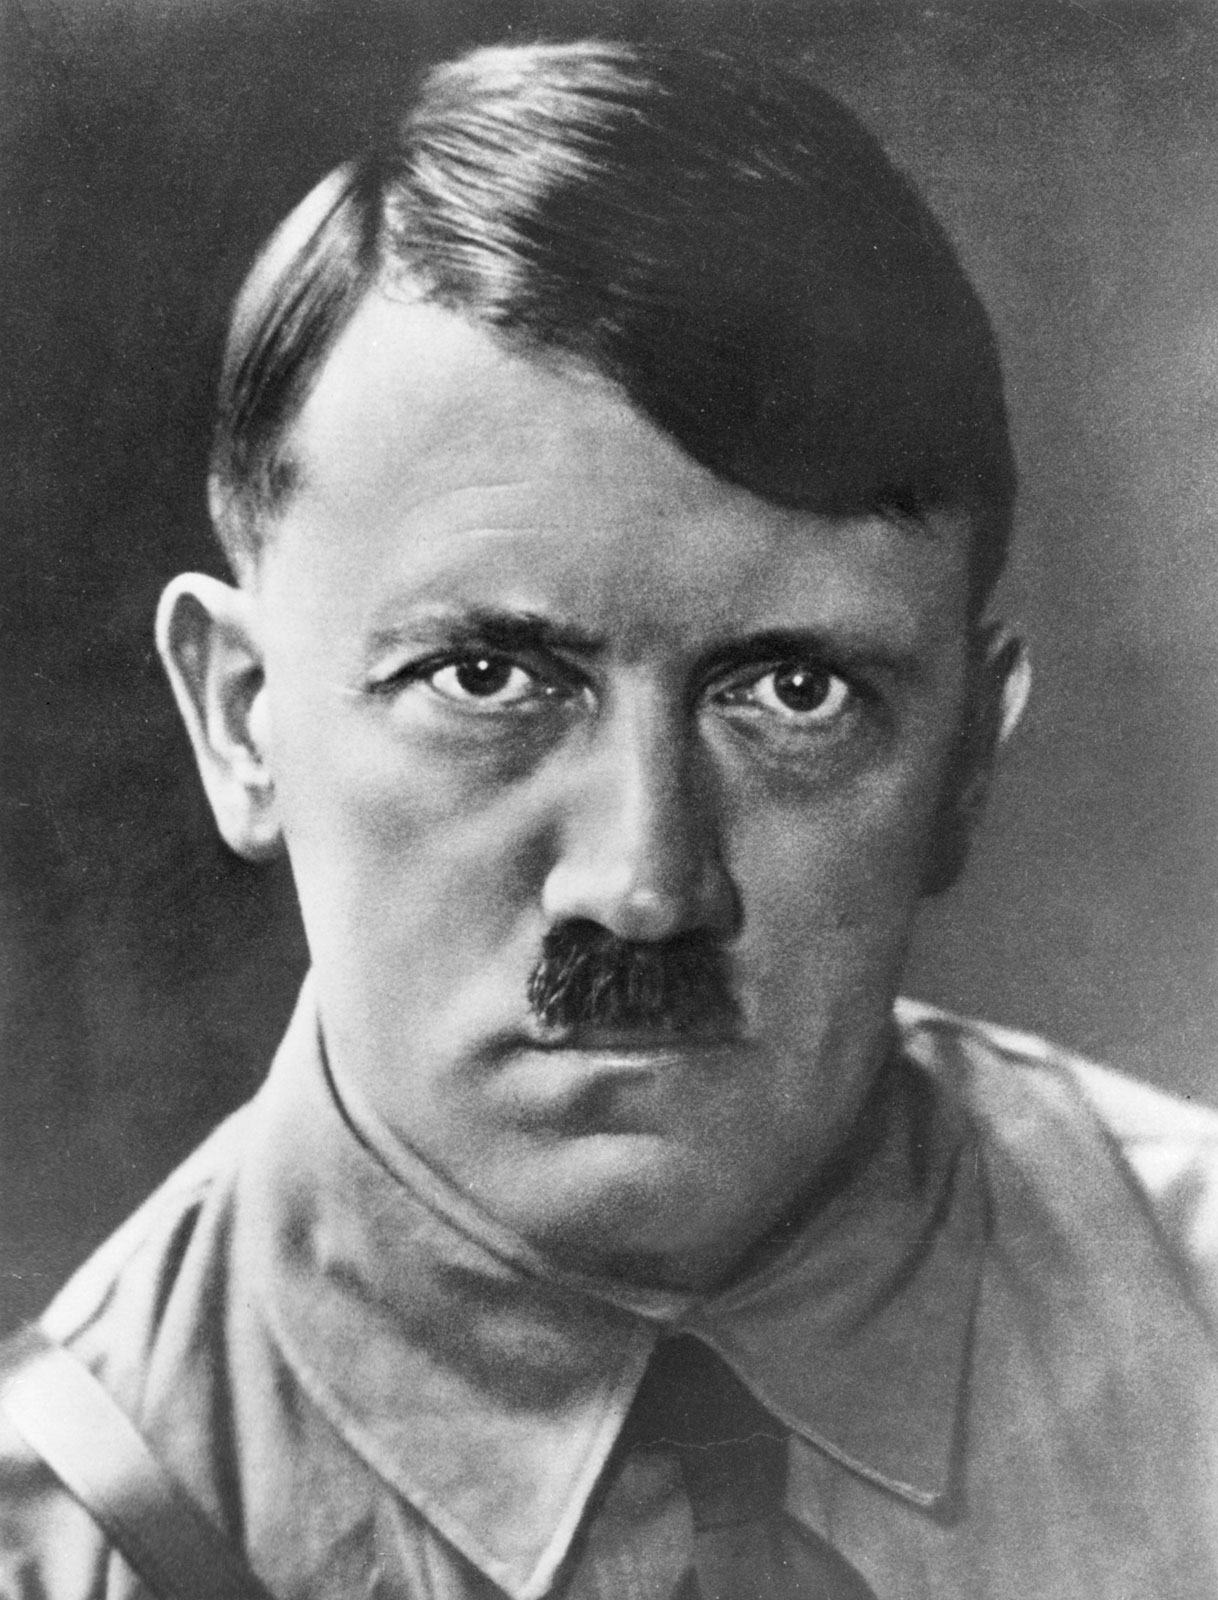 Гитлер Адольф